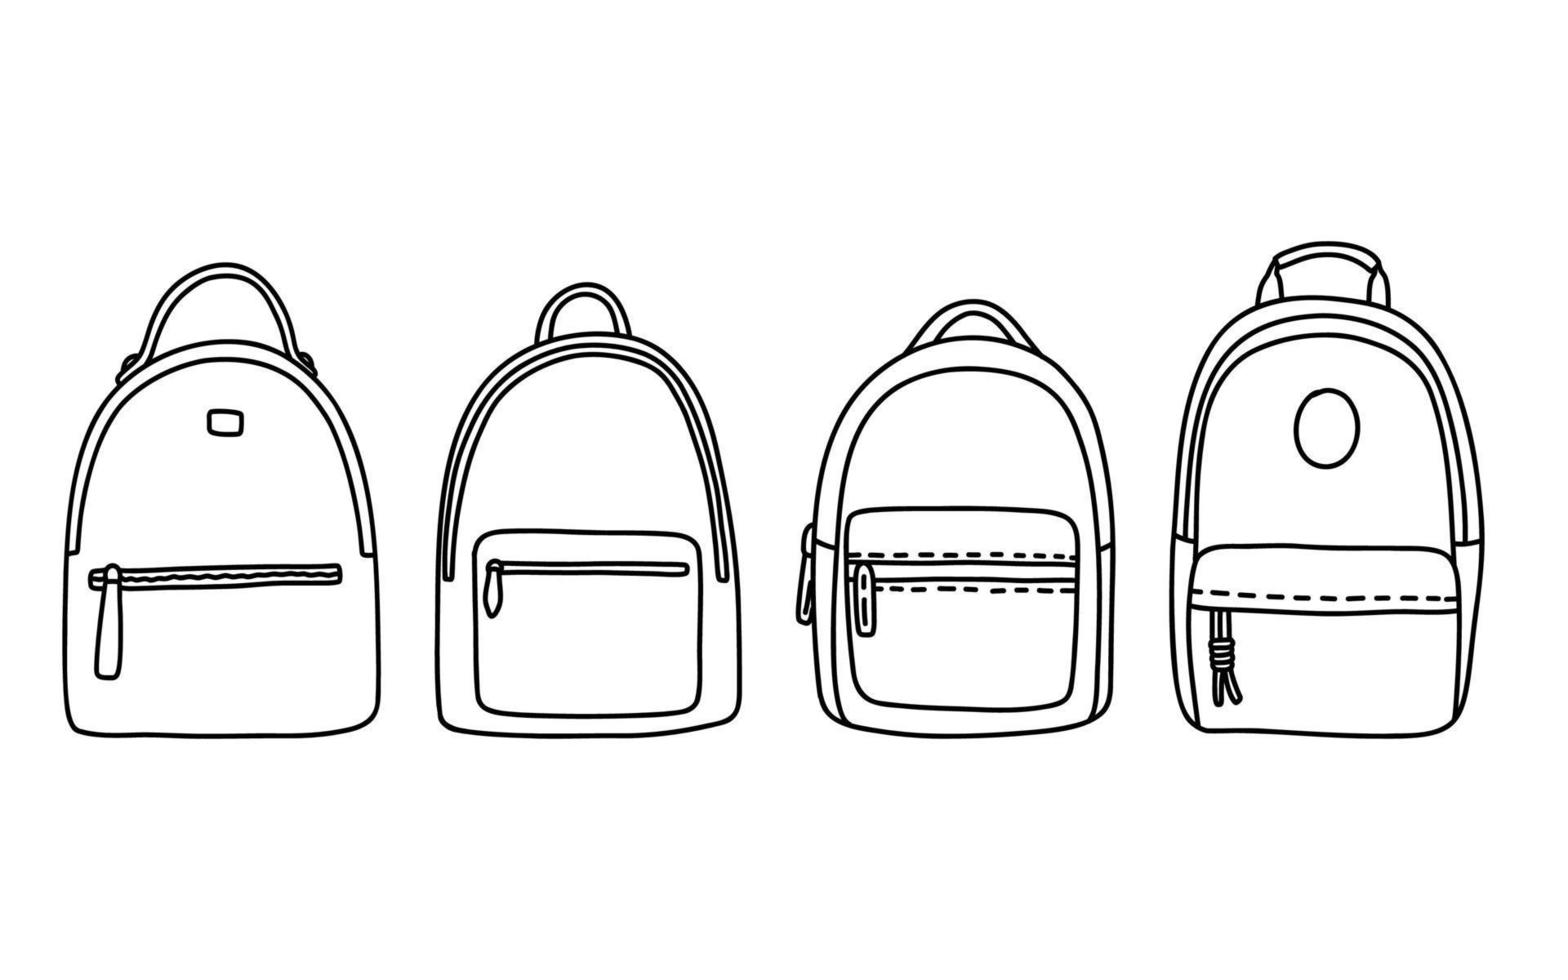 mochila mochila conjunto doodle ilustração vetorial simples preto e branco vetor